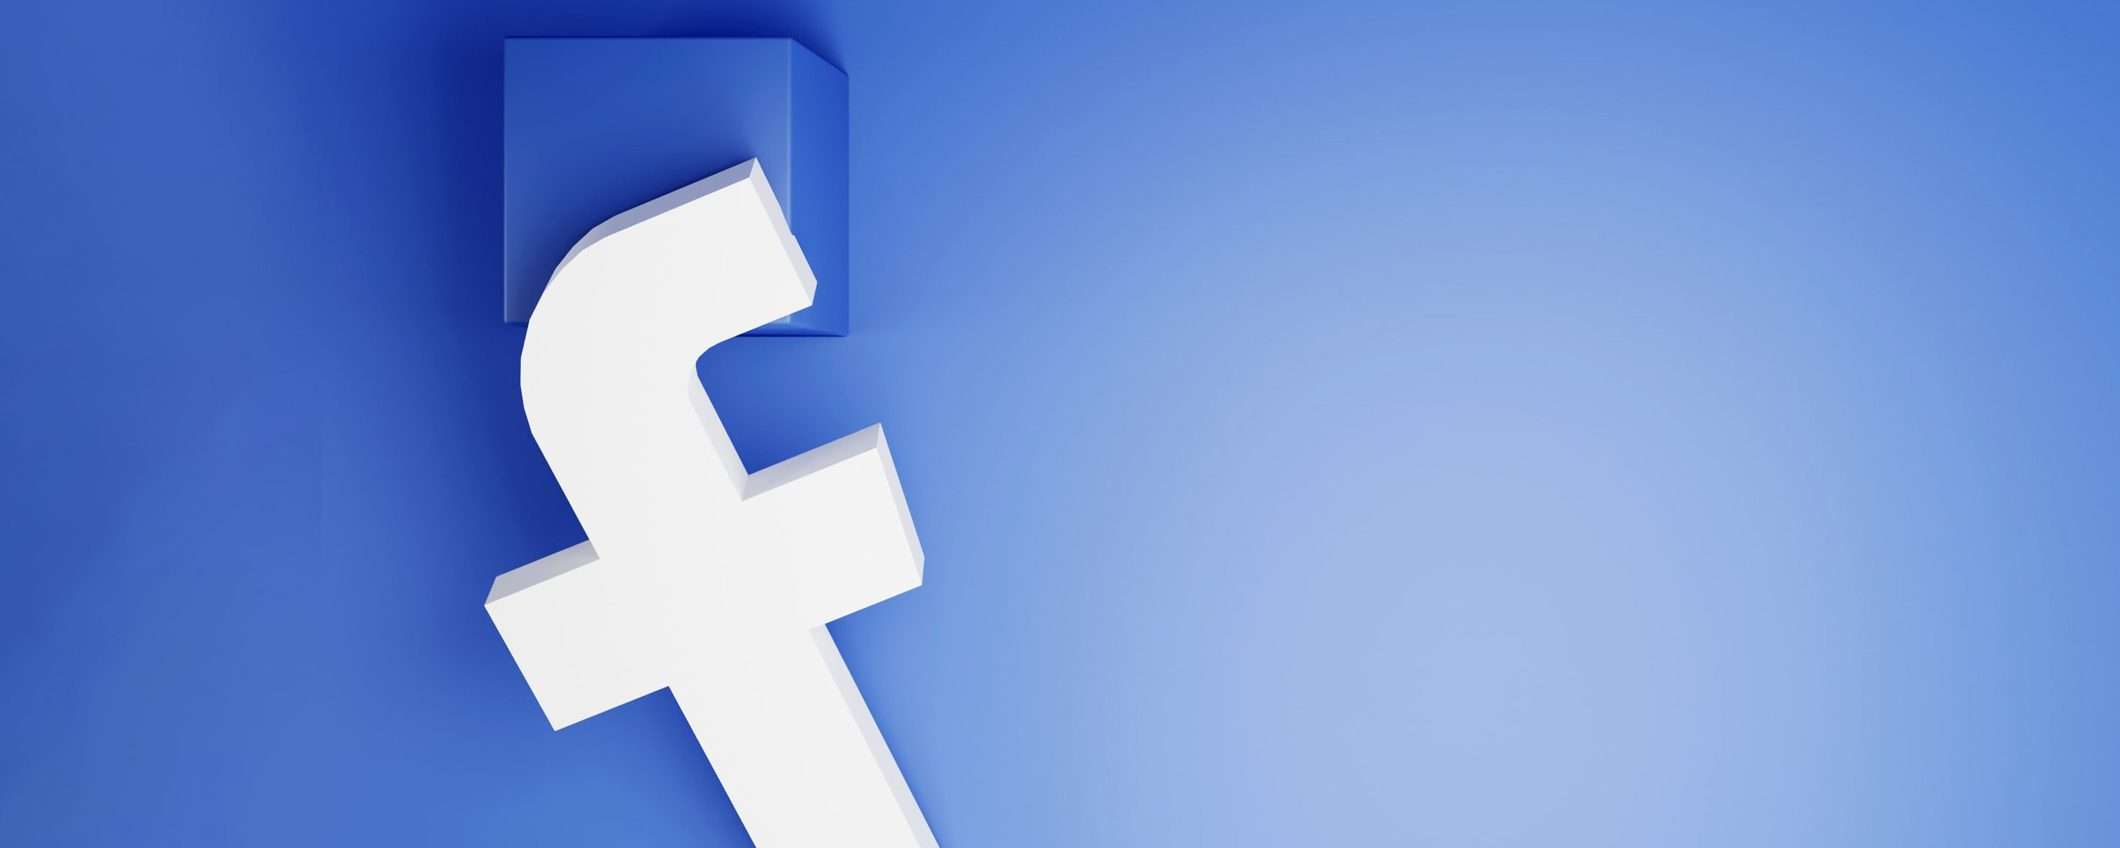 Password a rischio: Facebook avvisa gli utenti